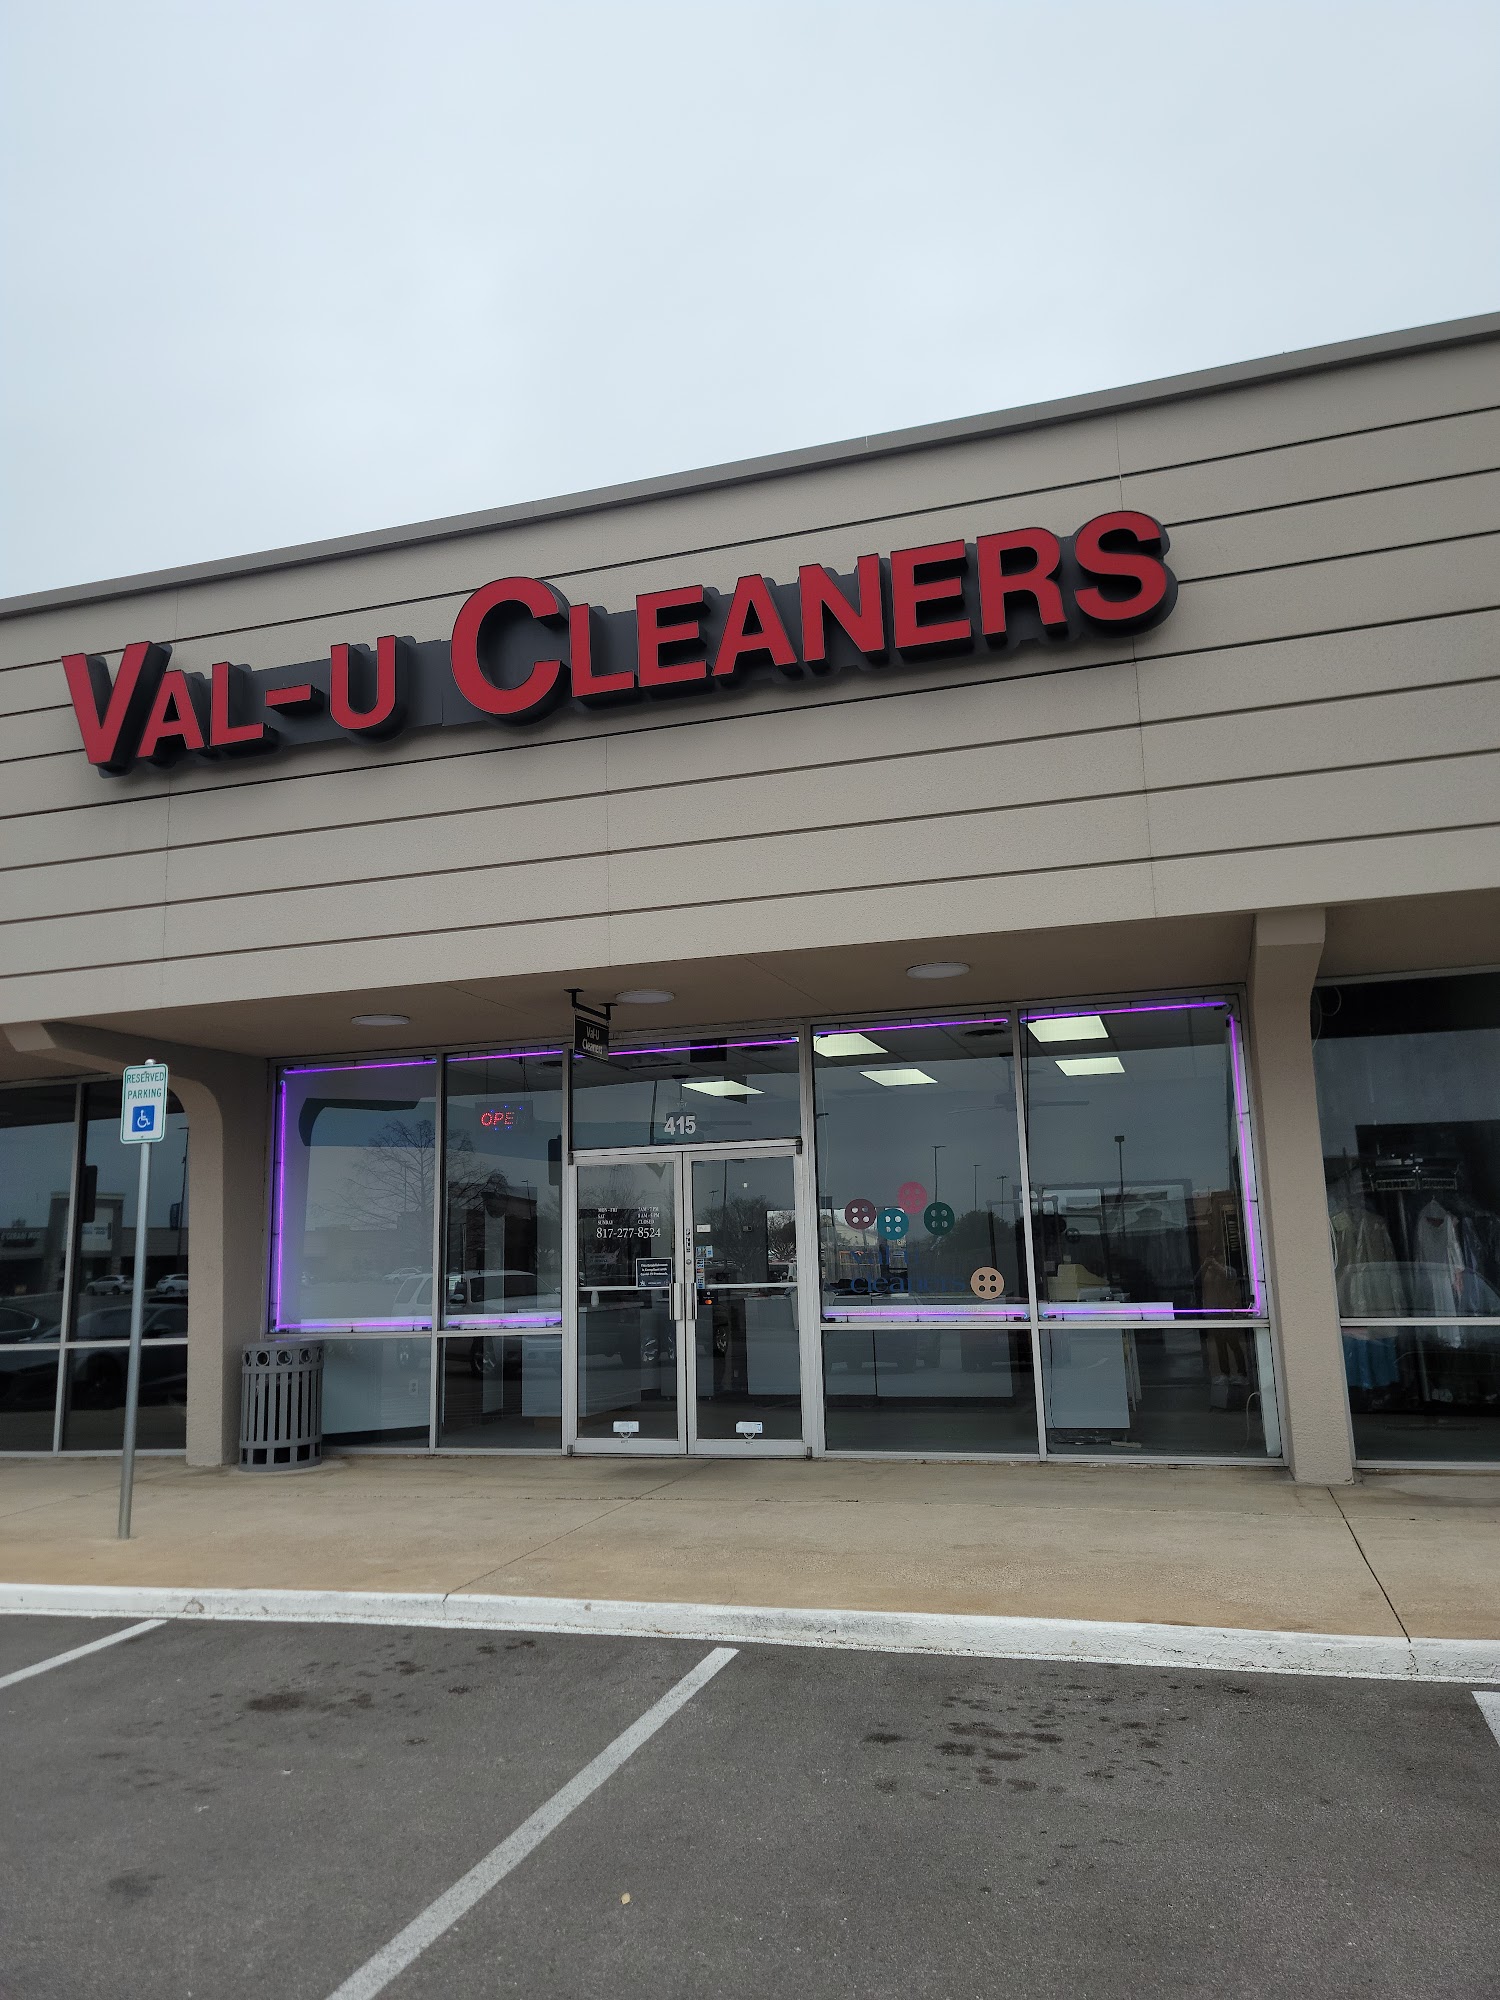 Val-U Cleaners